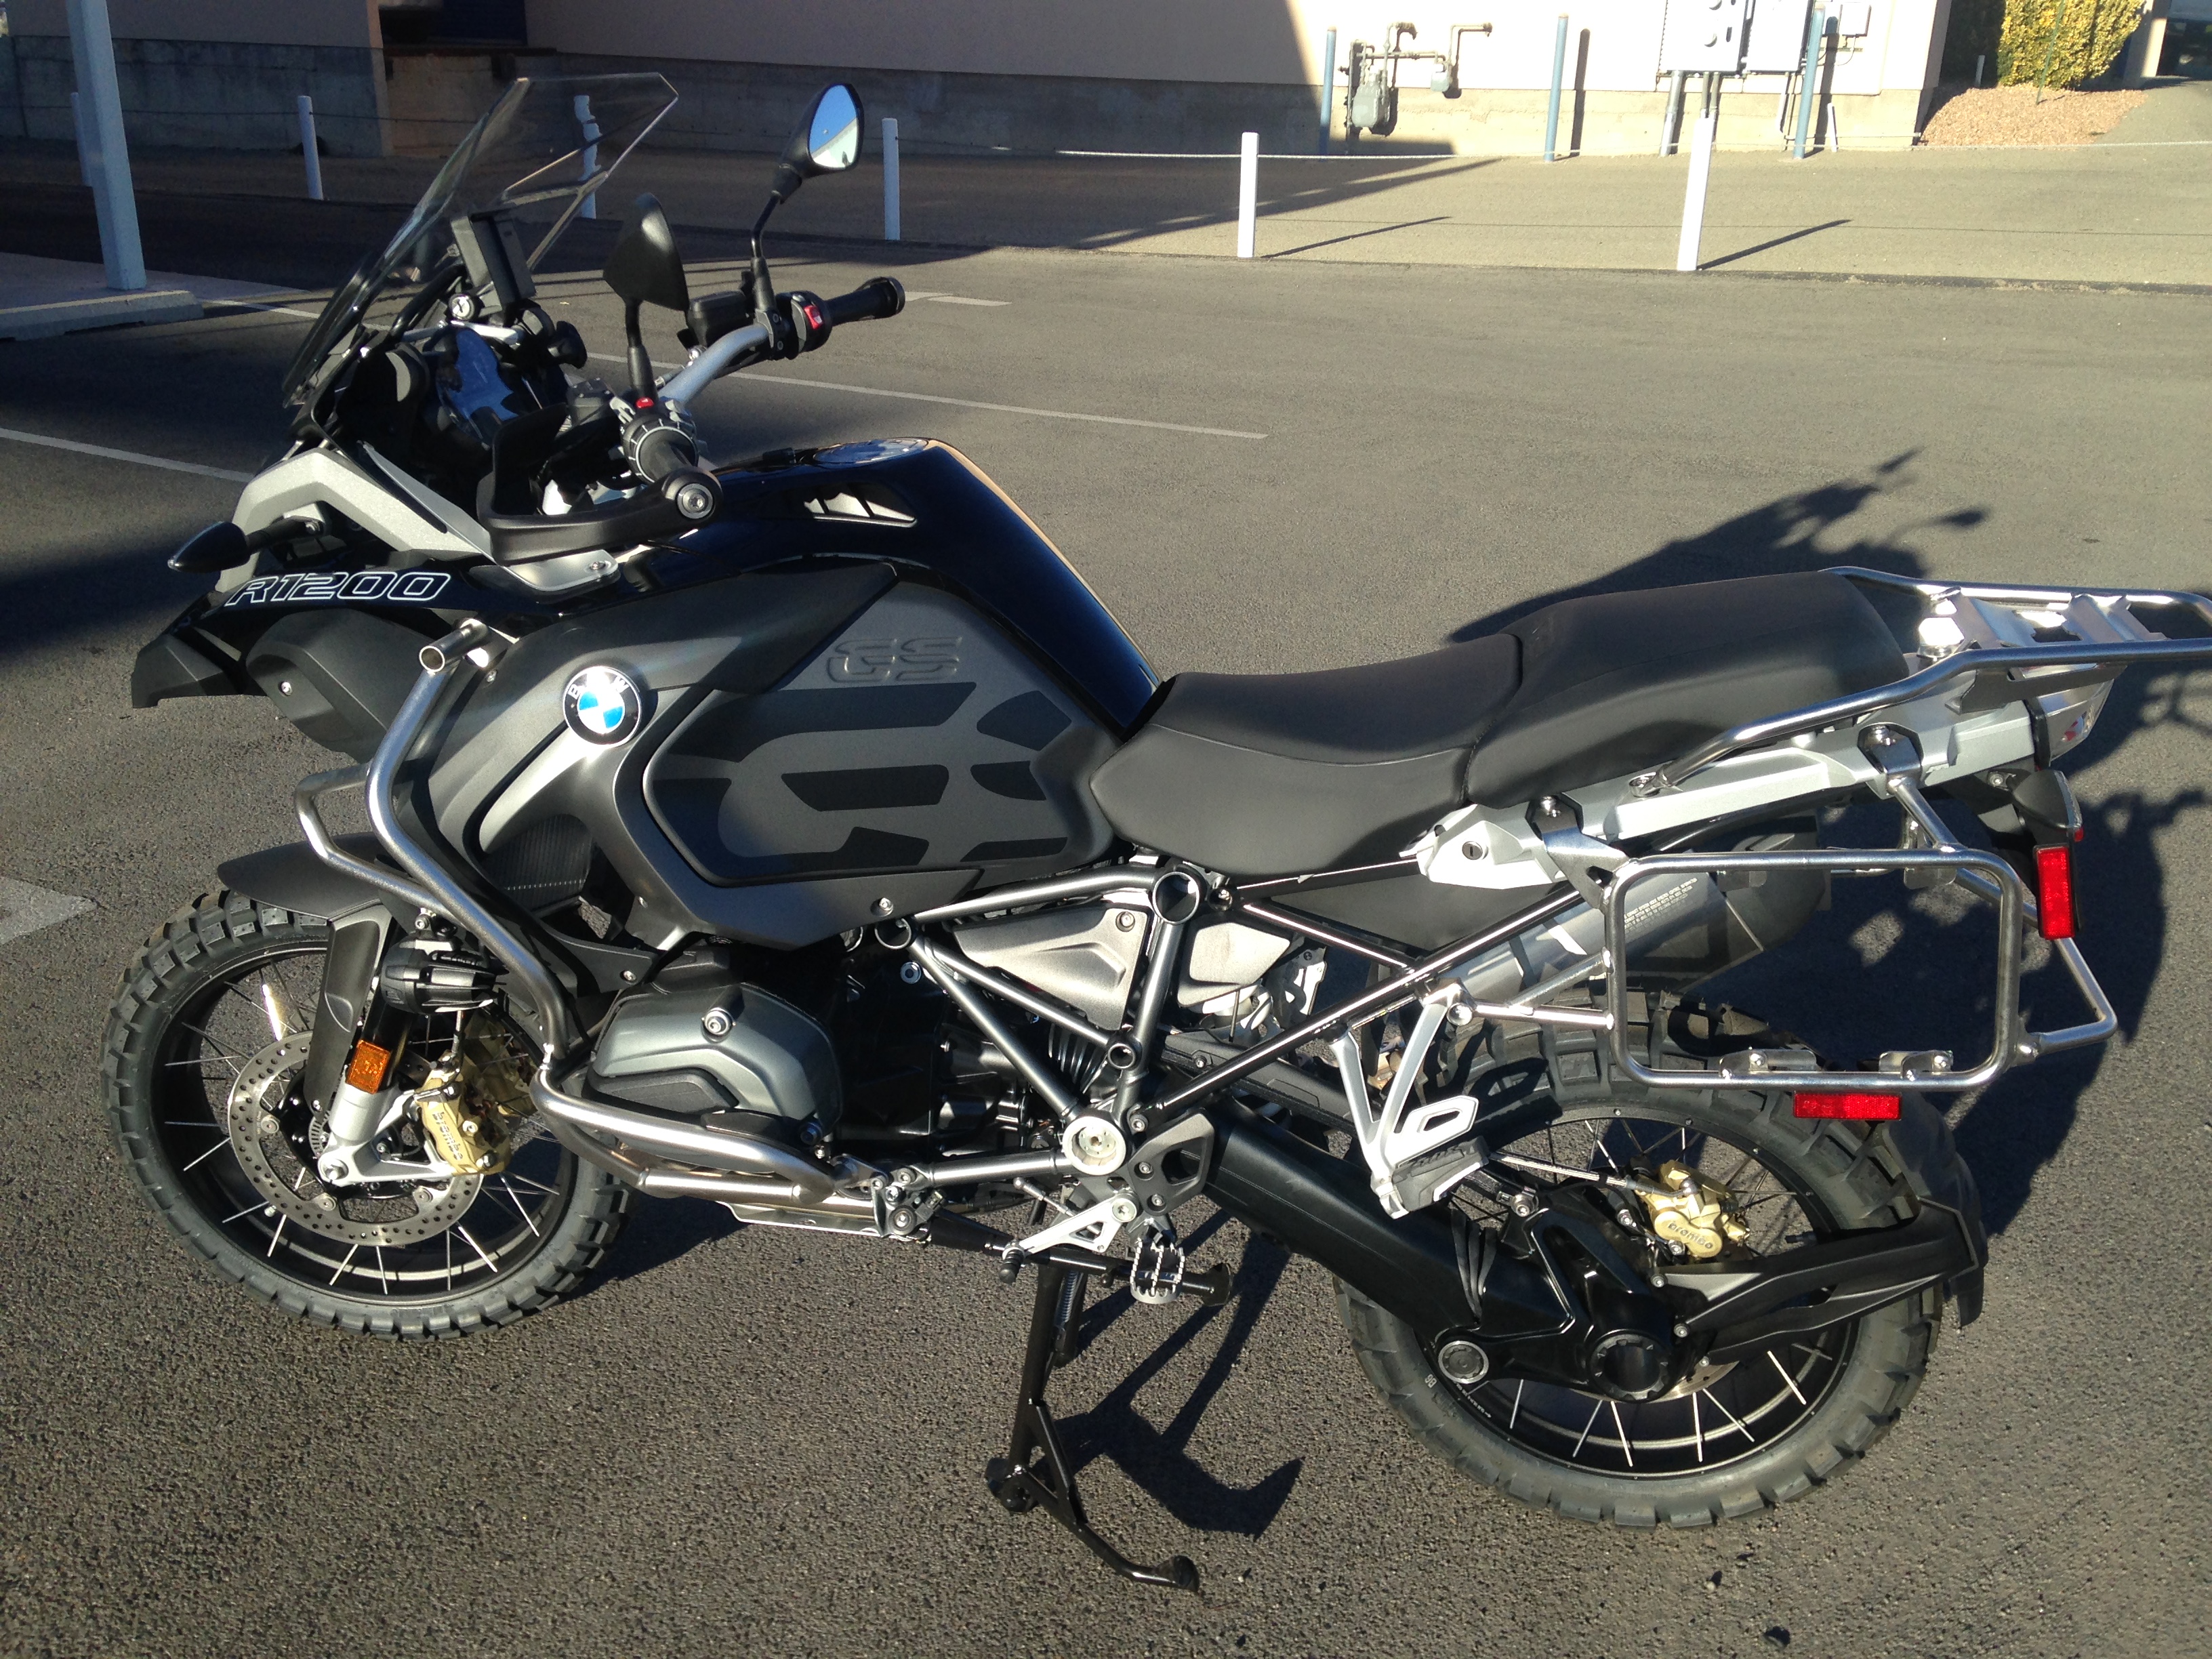 New BMW Motorcycles - R1200GSADV | Santa Fe BMW Motorcycles | Santa Fe, NM